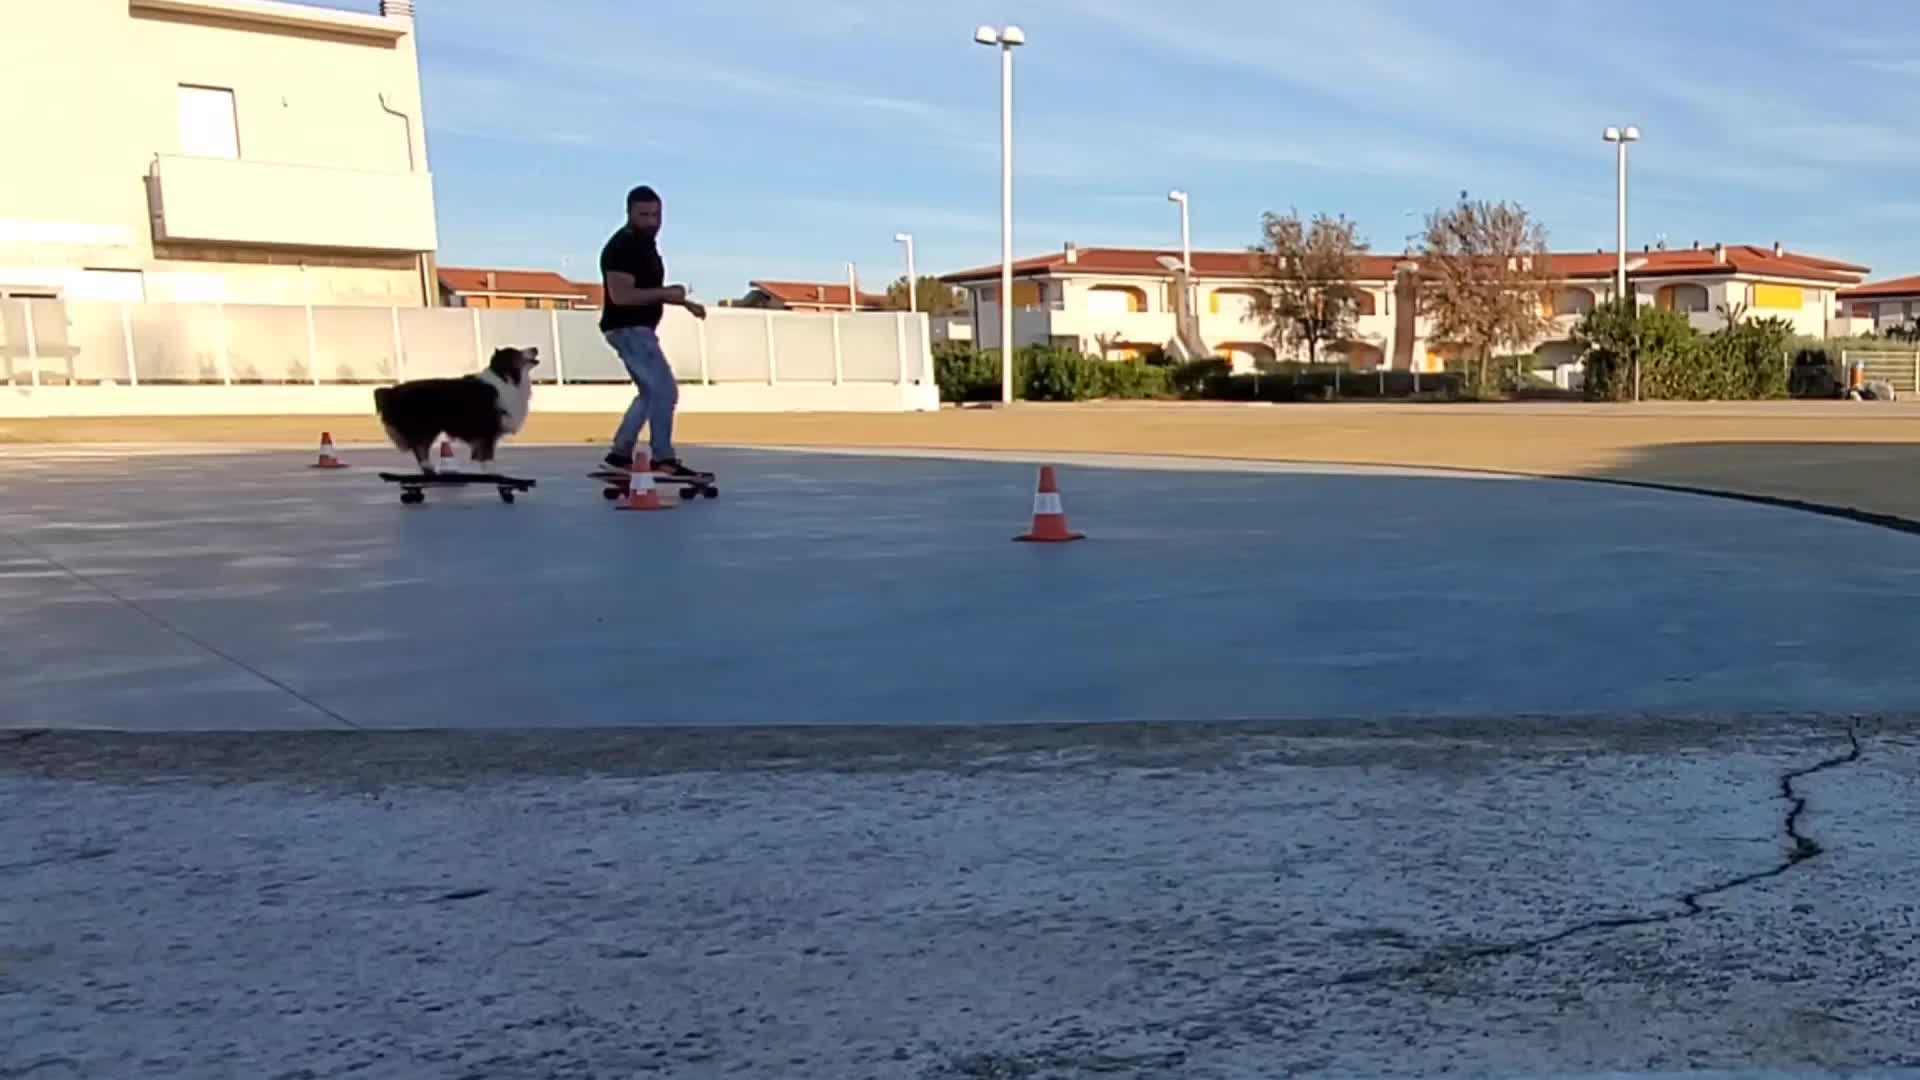 Skateboarding Dog Skillfully Slaloms through Cones